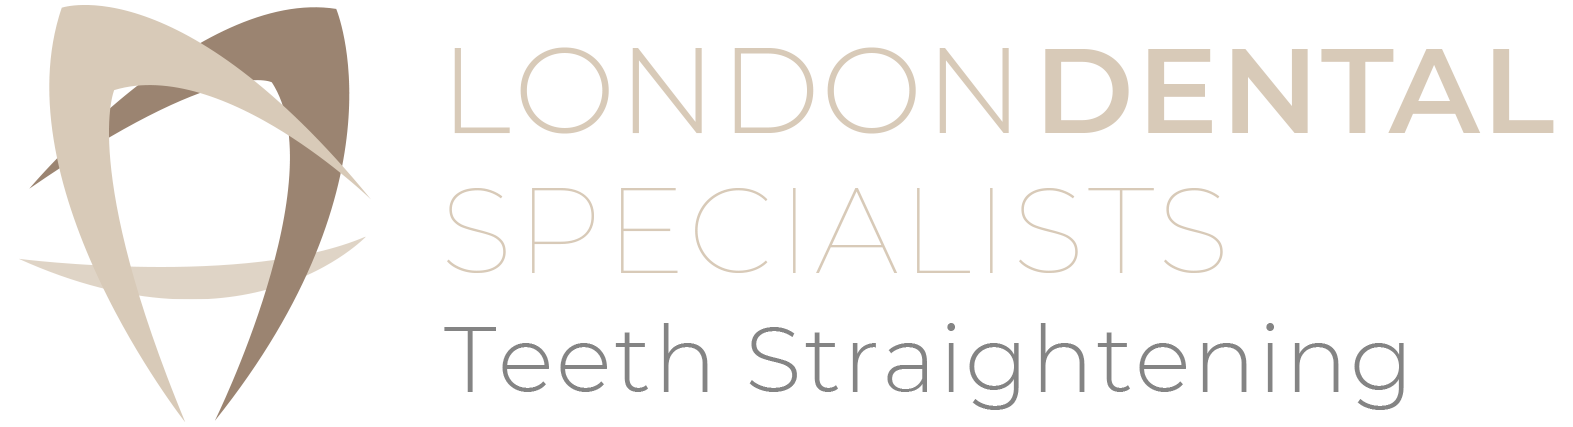 Teeth Straightening London